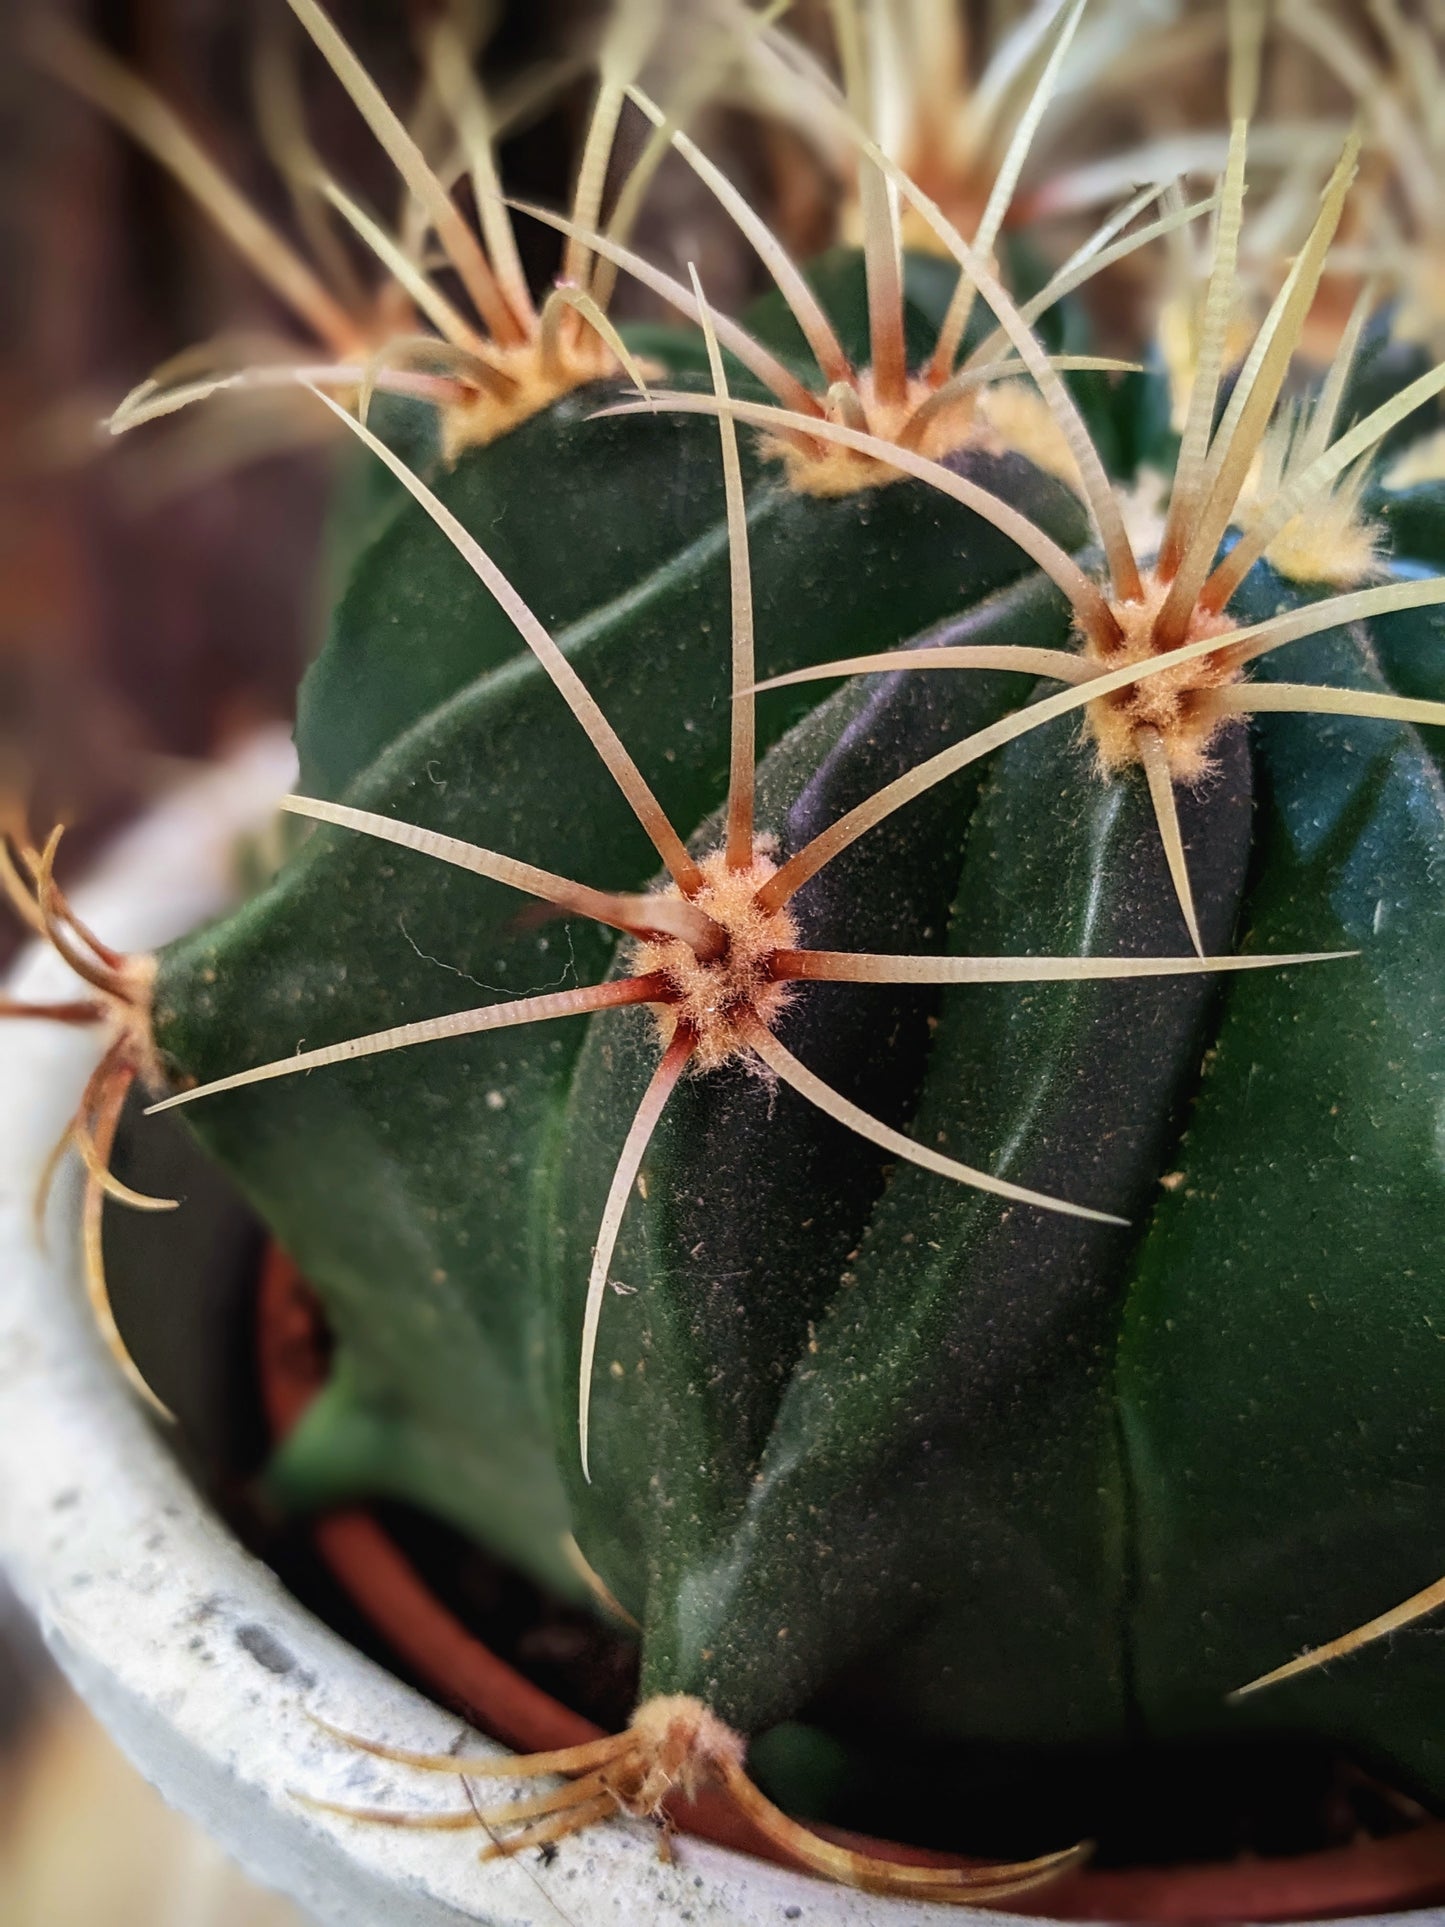 Thorny (Cactus)